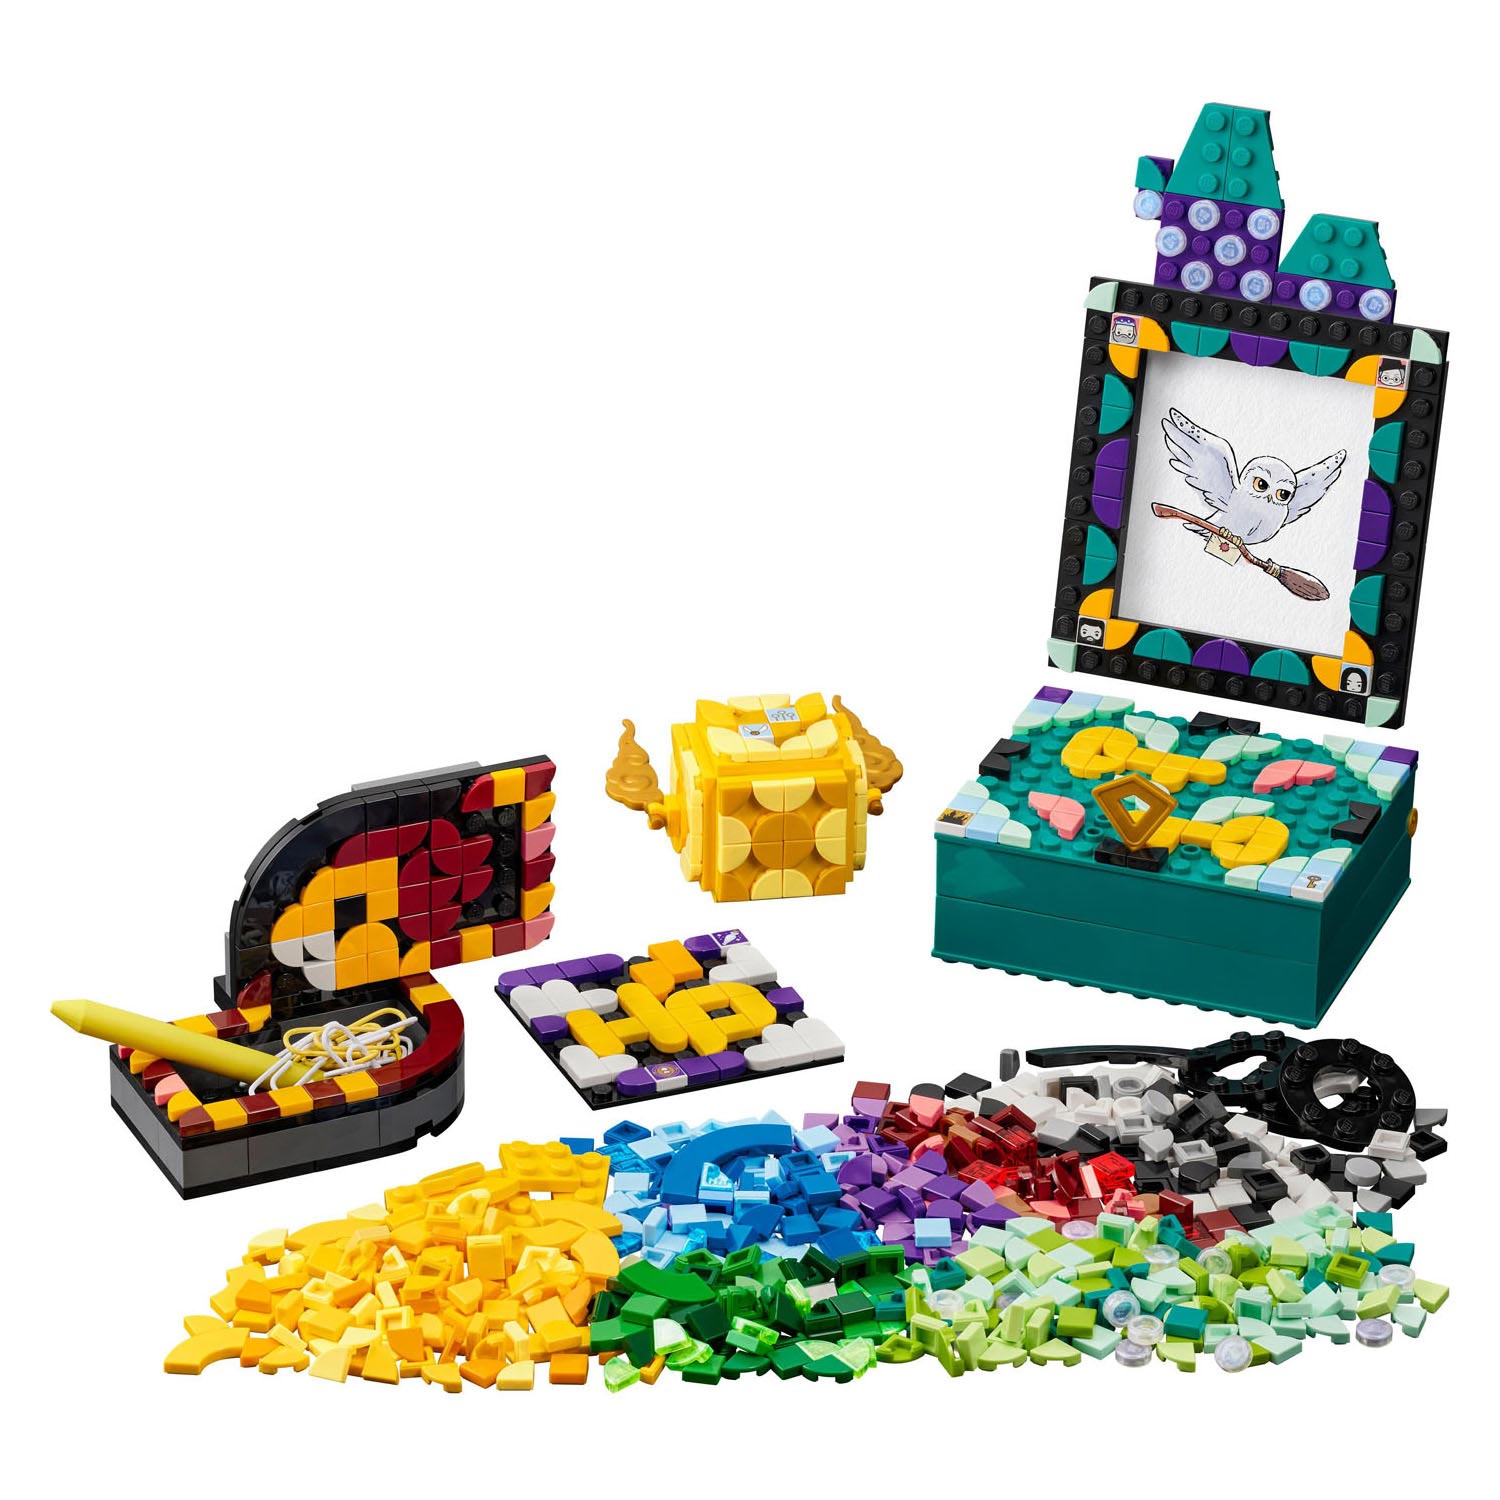 LEGO DOTS 41811 Harry Potter Hogwarts Schreibtisch-Set